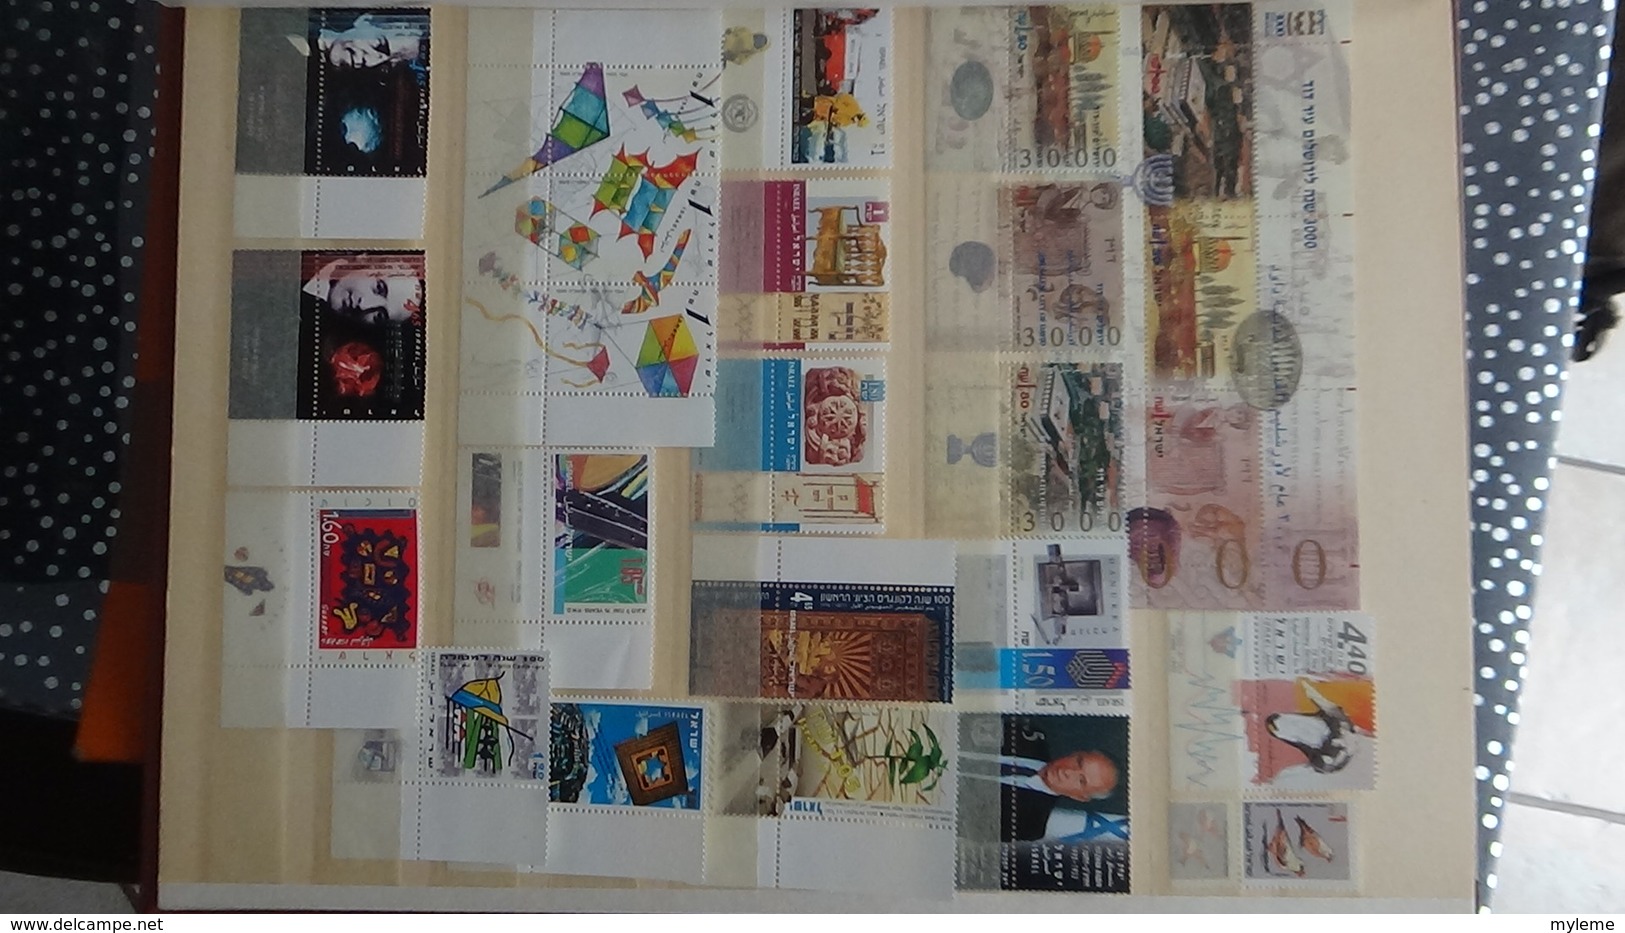 B395 Petite collection d'ISRAEL timbres et blocs ** . A saisir !!!